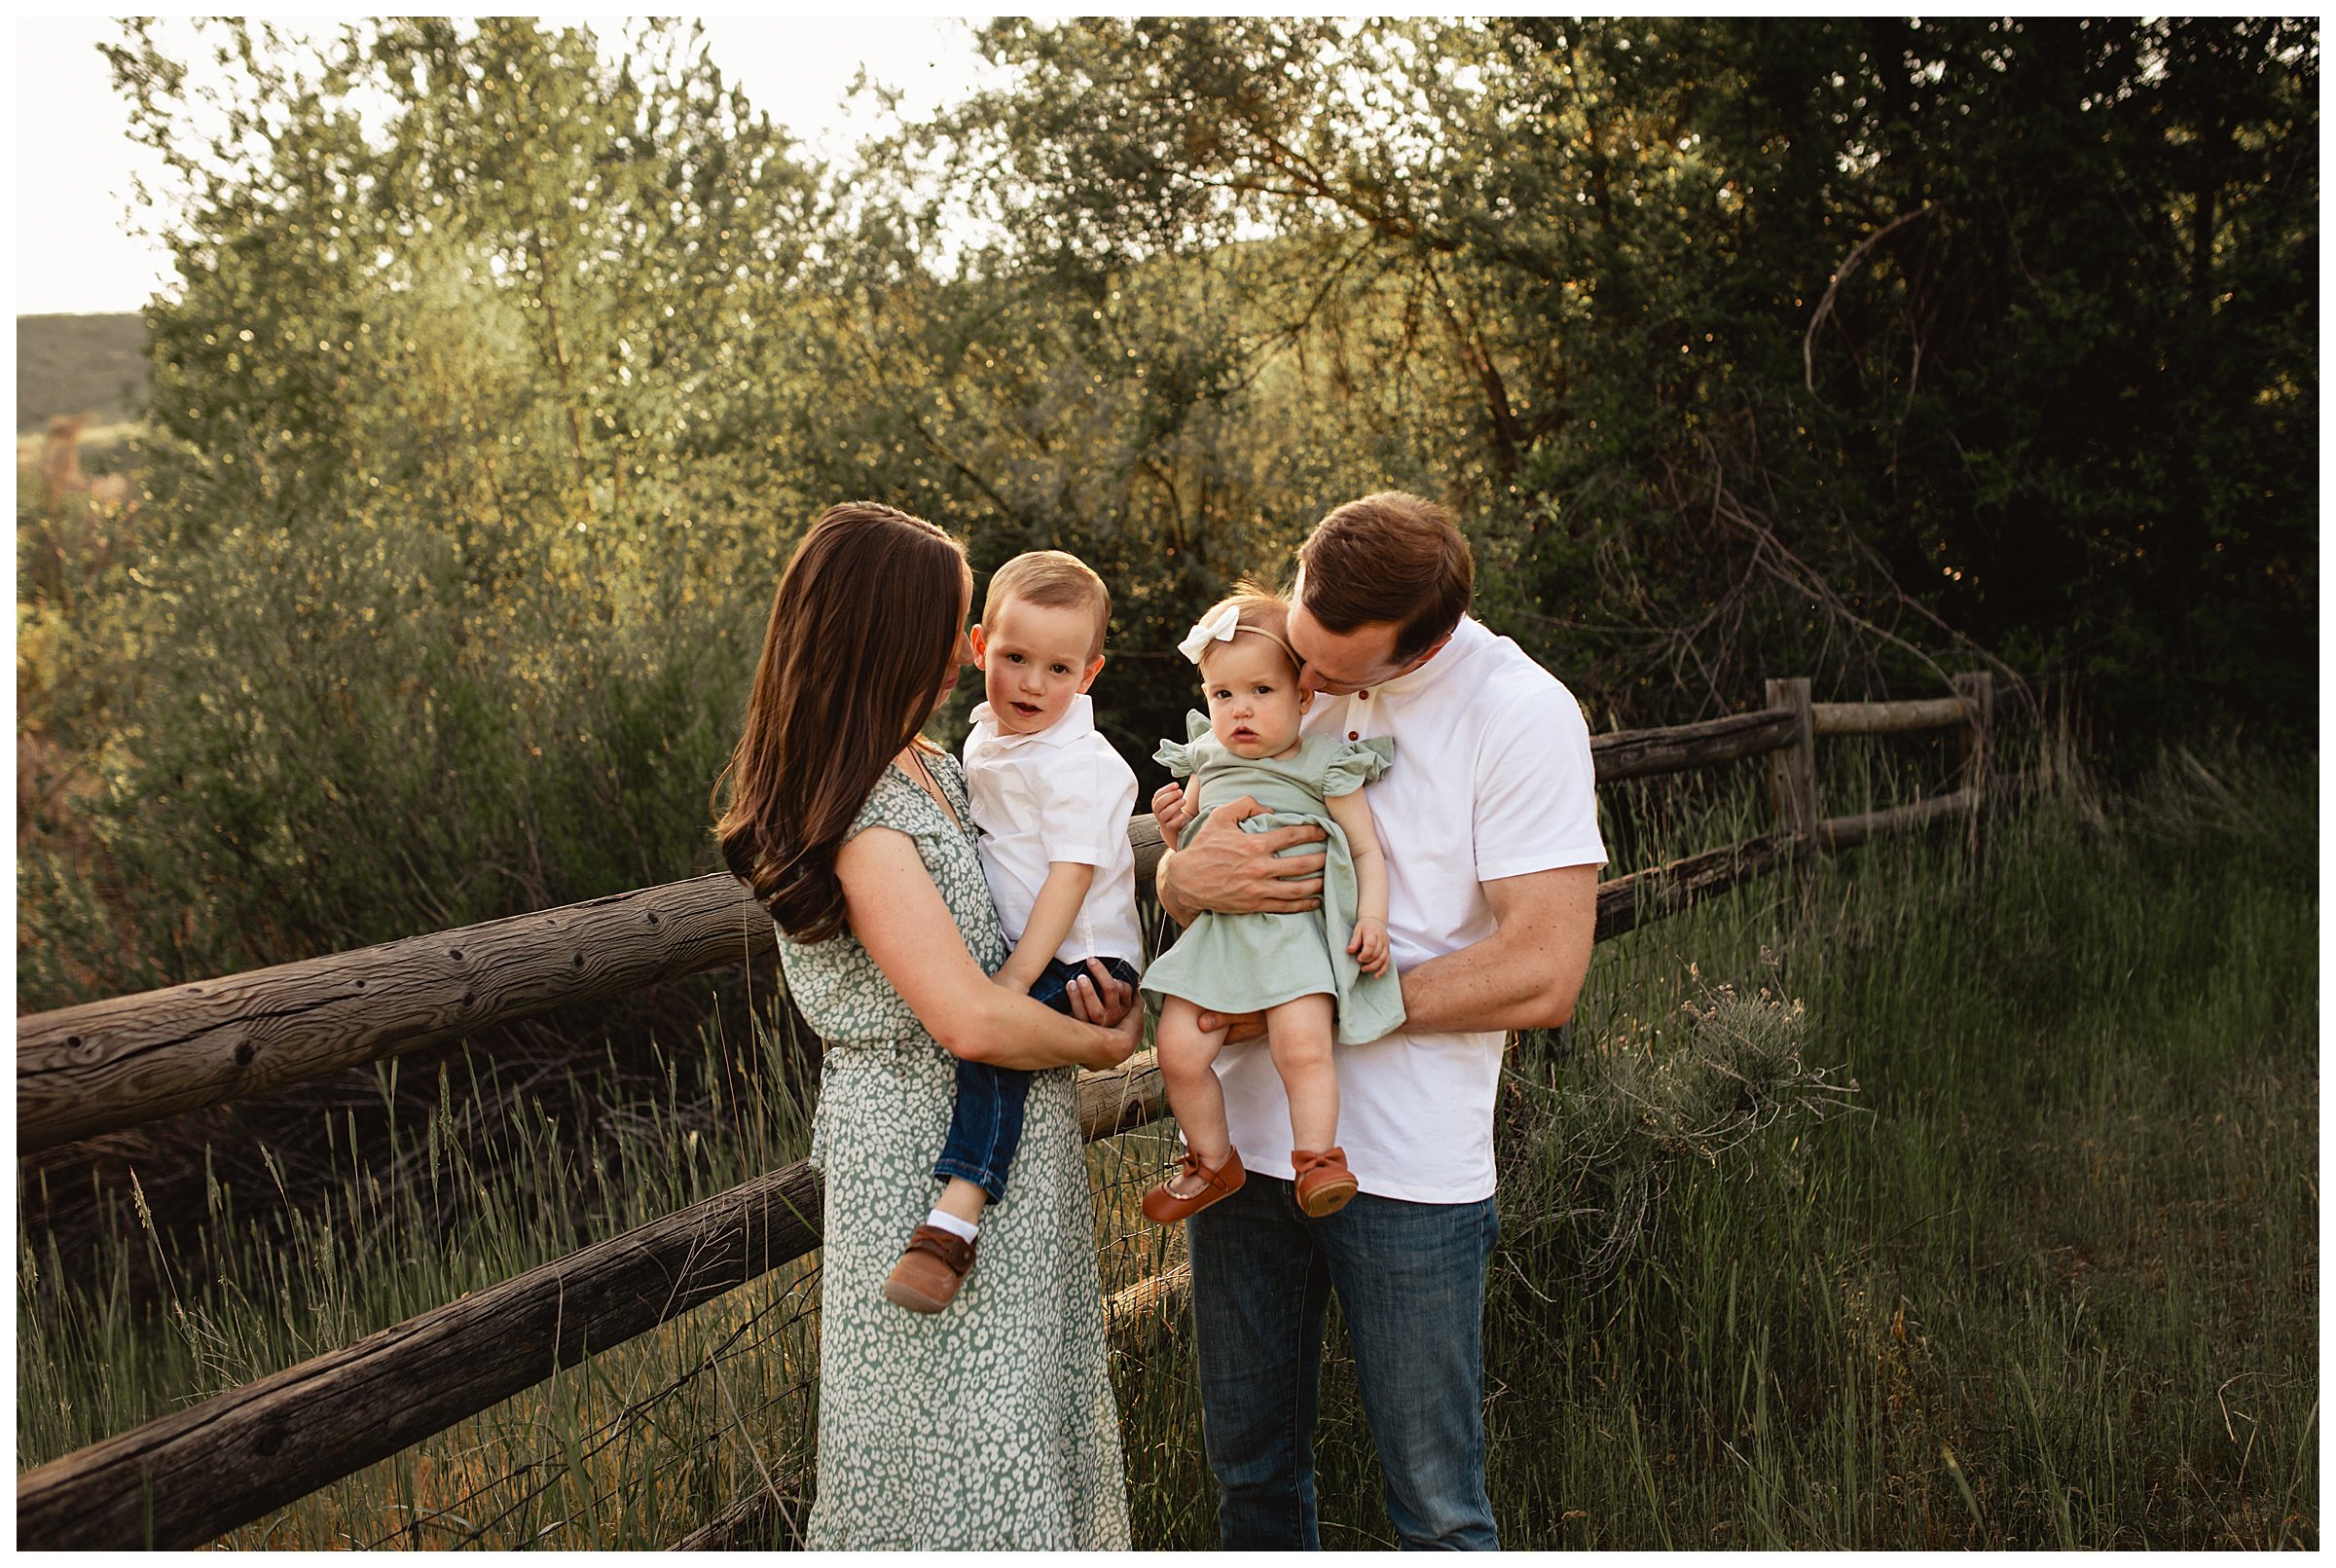 Jared23-4_Boise Family Photography.jpg